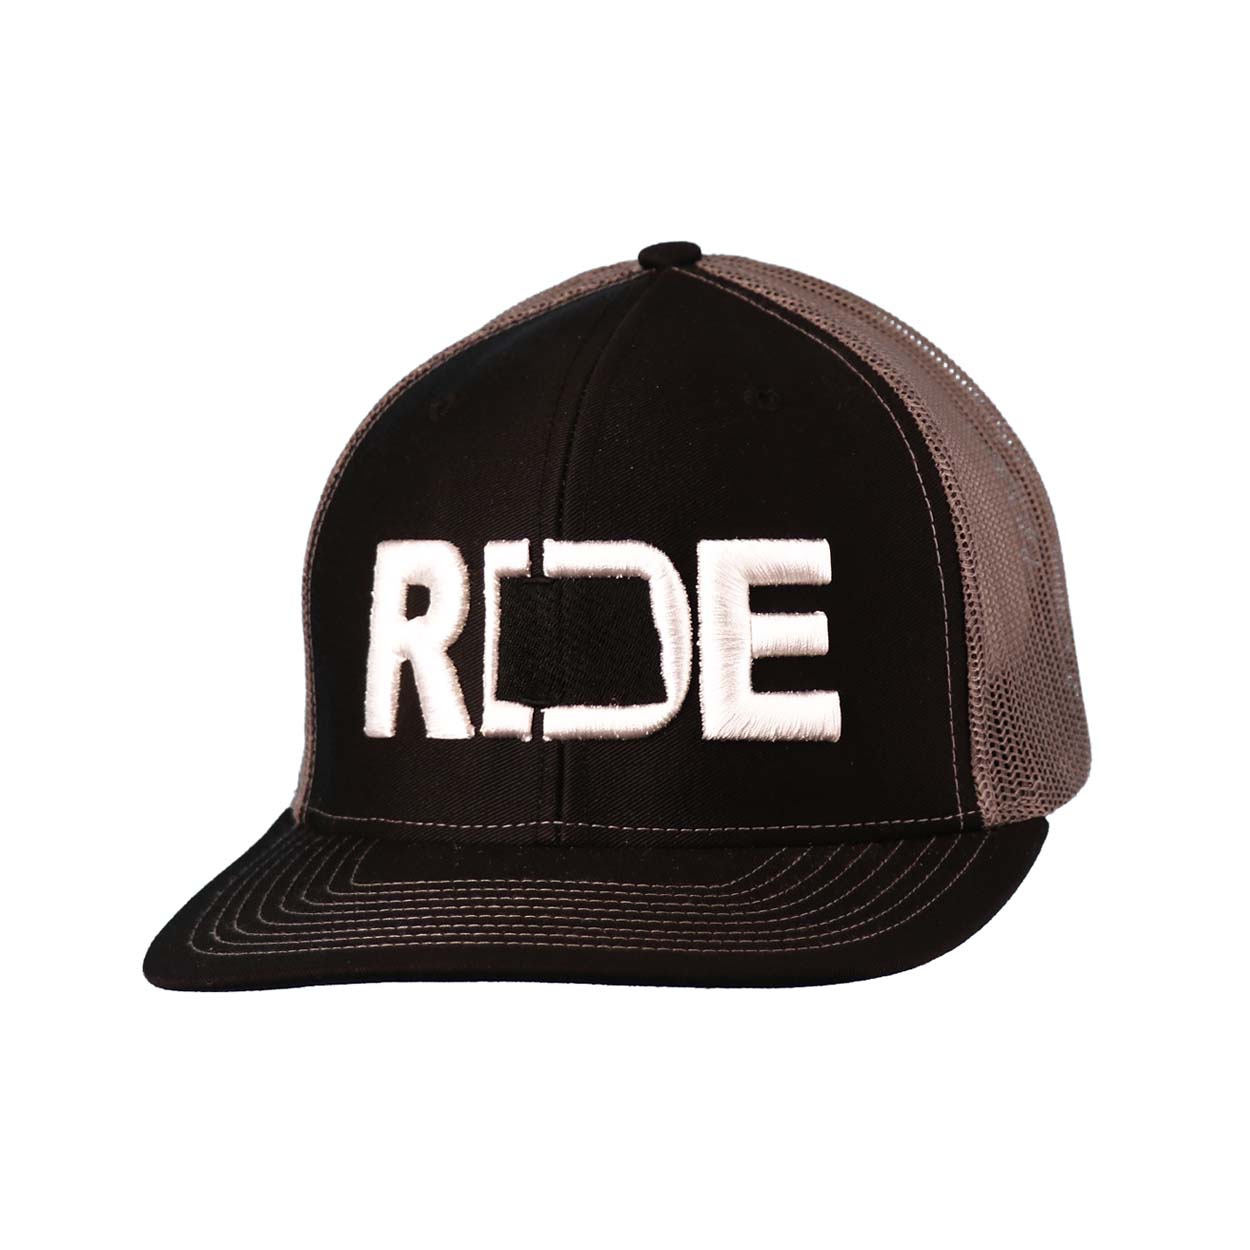 Ride North Dakota Classic Embroidered Snapback Trucker Hat Black/Charcoal